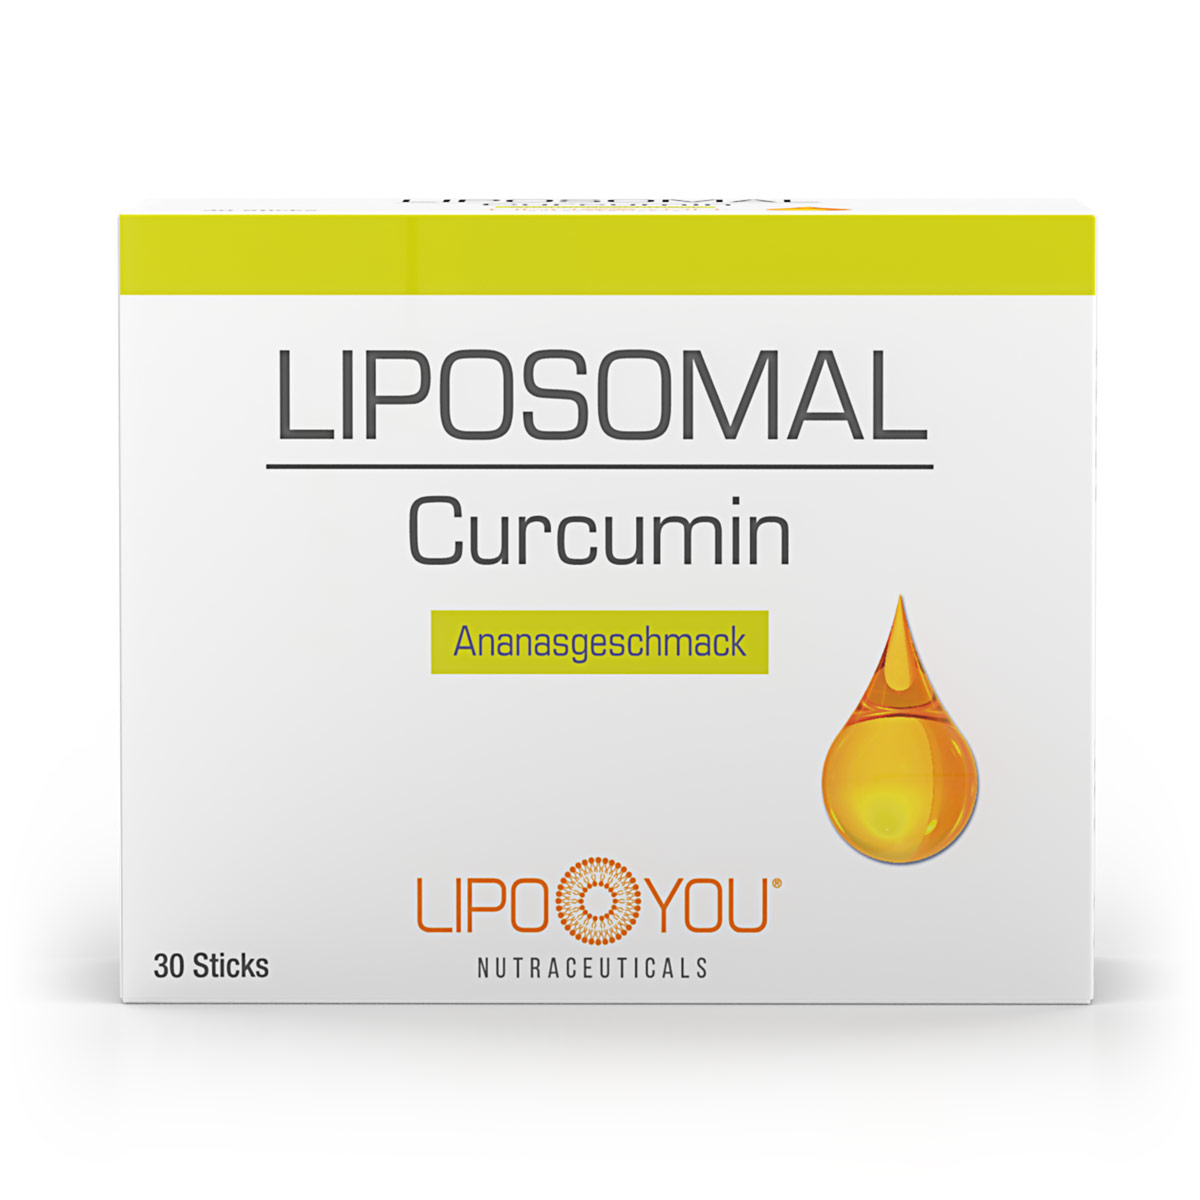 LIPOSOMAL Curcumin Produktverpackung